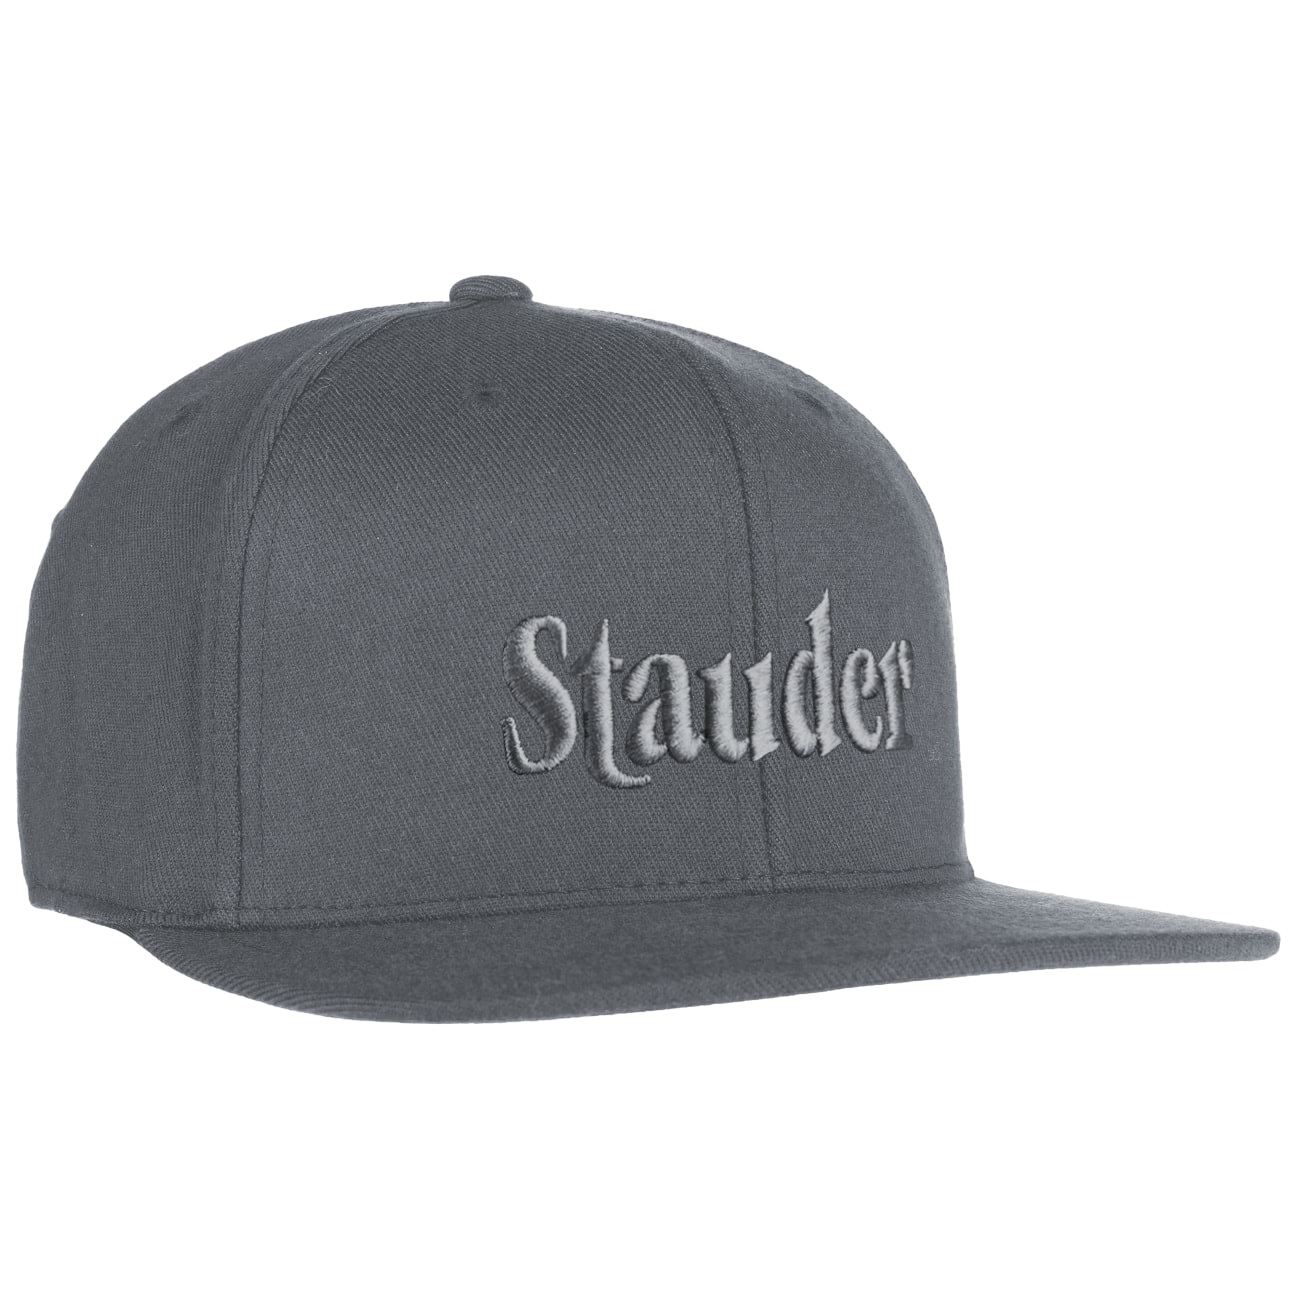 Stauder Snapback-Cap